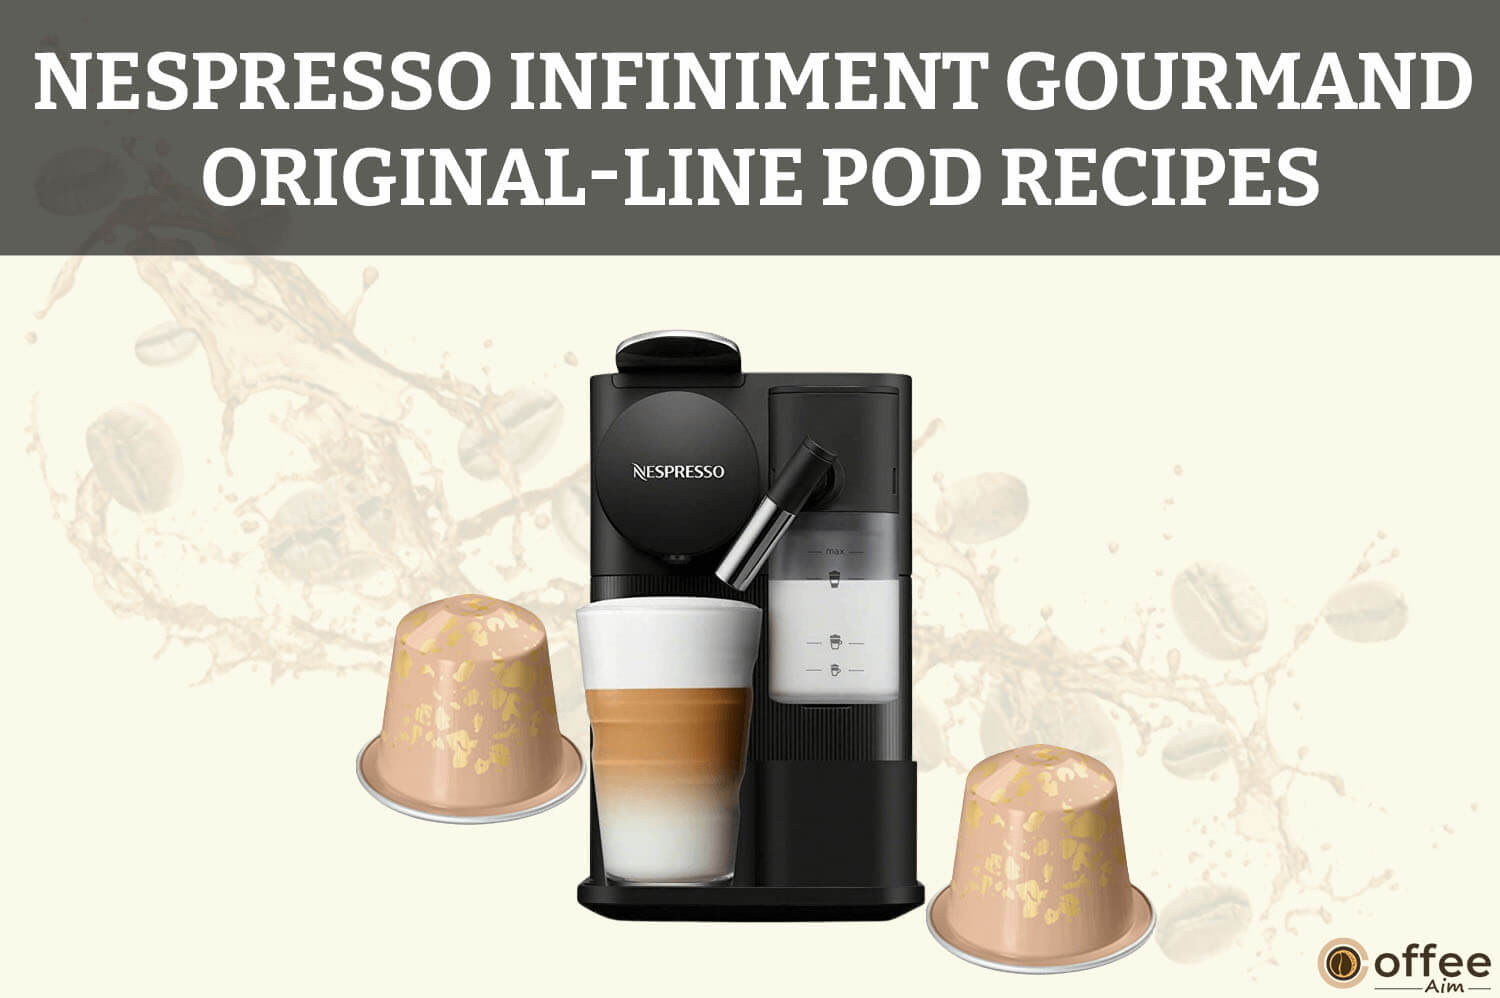 Featured image for the article "Nespresso Infiniment Gourmand OriginalLine Pod Recipes"